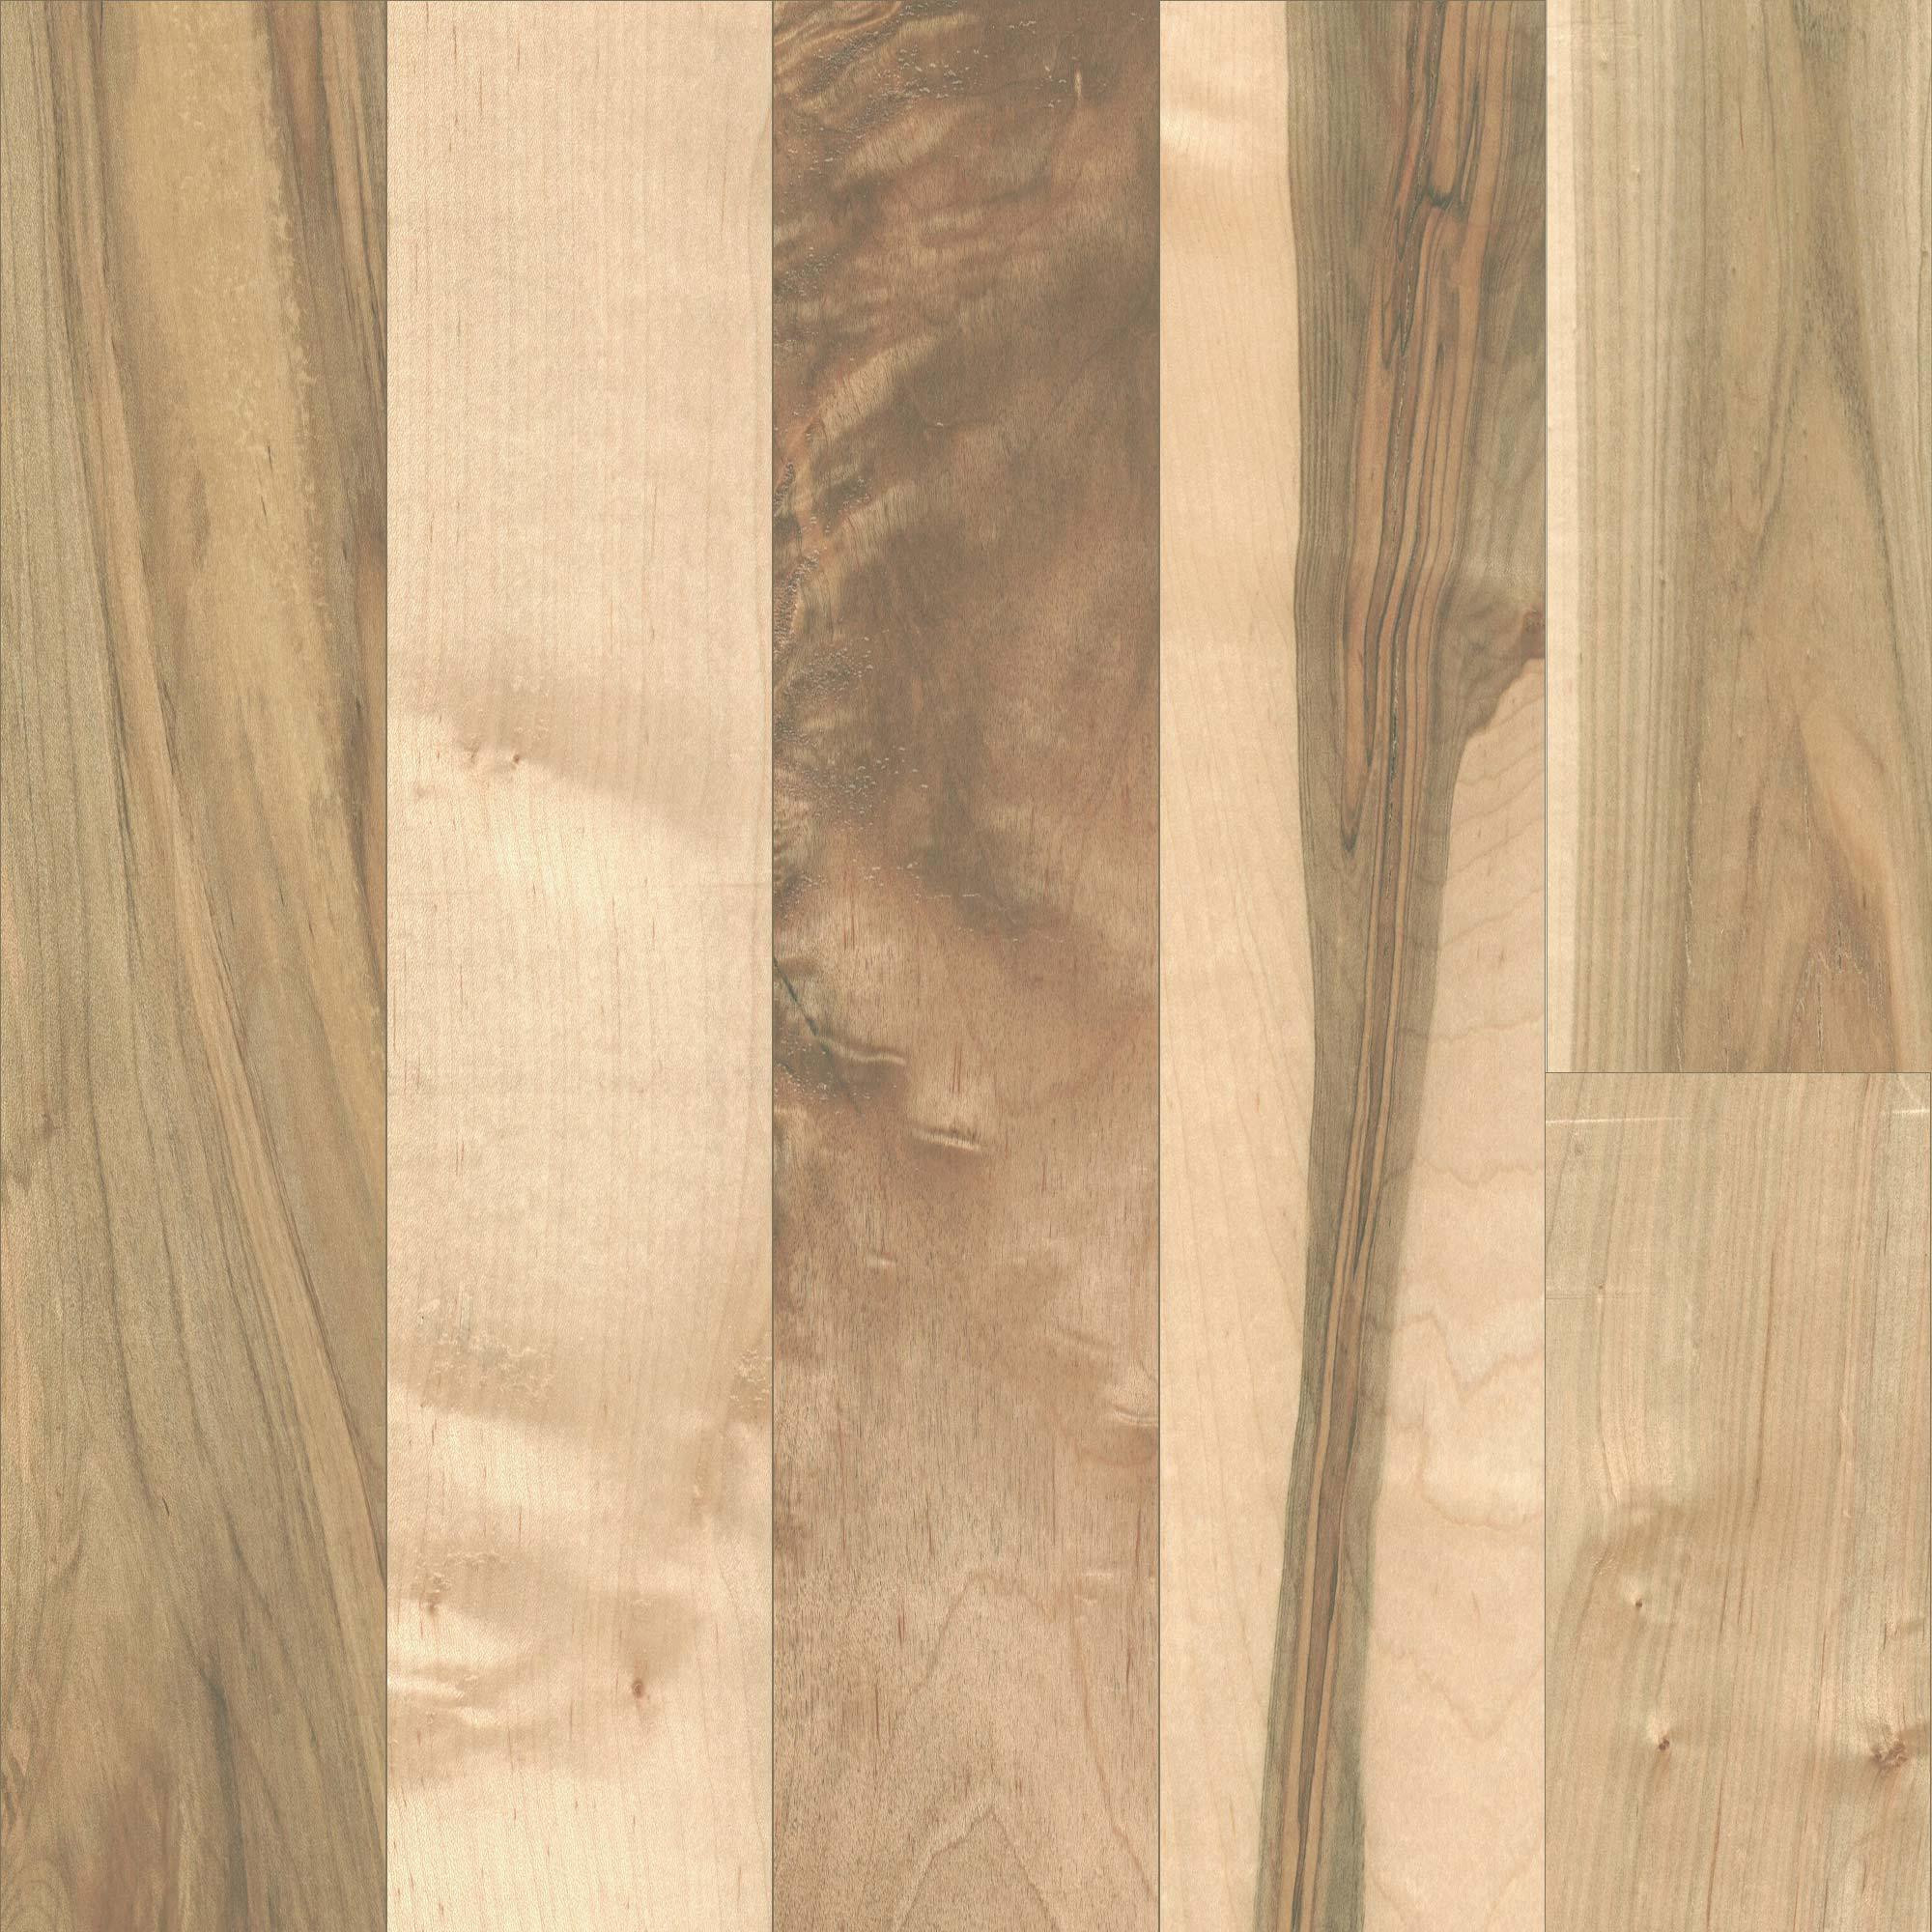 Installing 3 4 Inch Hardwood Flooring Of Kingsmill Natural Maple 4 Wide 3 4 solid Hardwood Flooring Regarding Natural Maple M Unat4 4 X 36 Approved